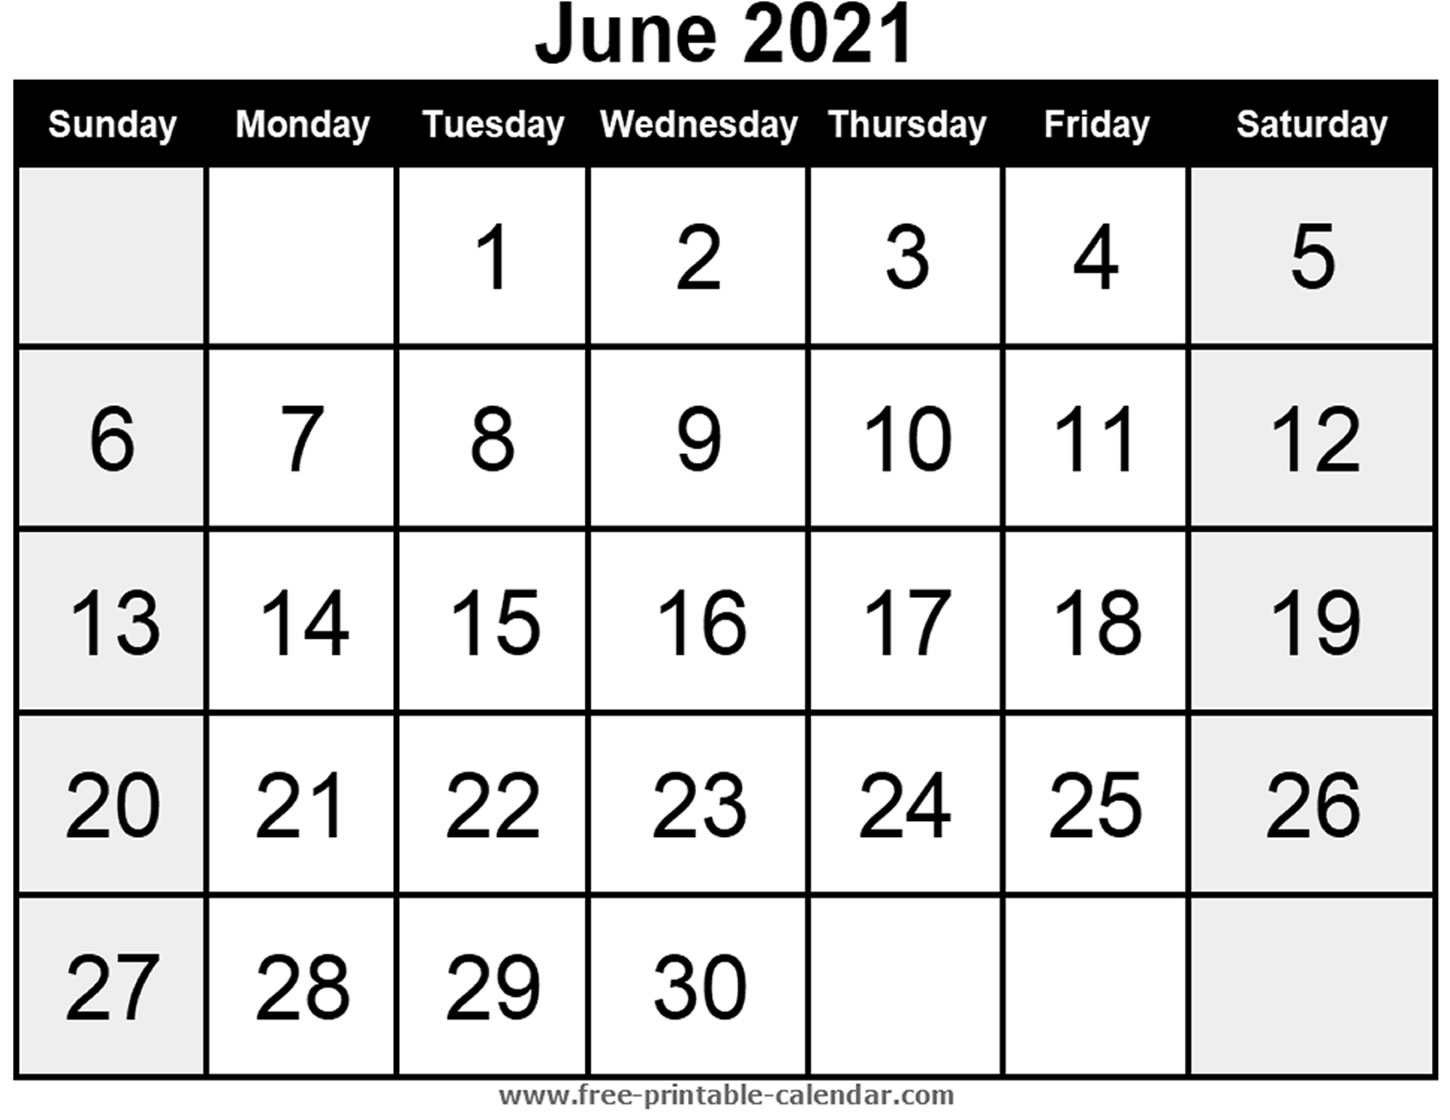 Blank Calendar June 2021 - Free-Printable-Calendar June 2021 Calendar Editable